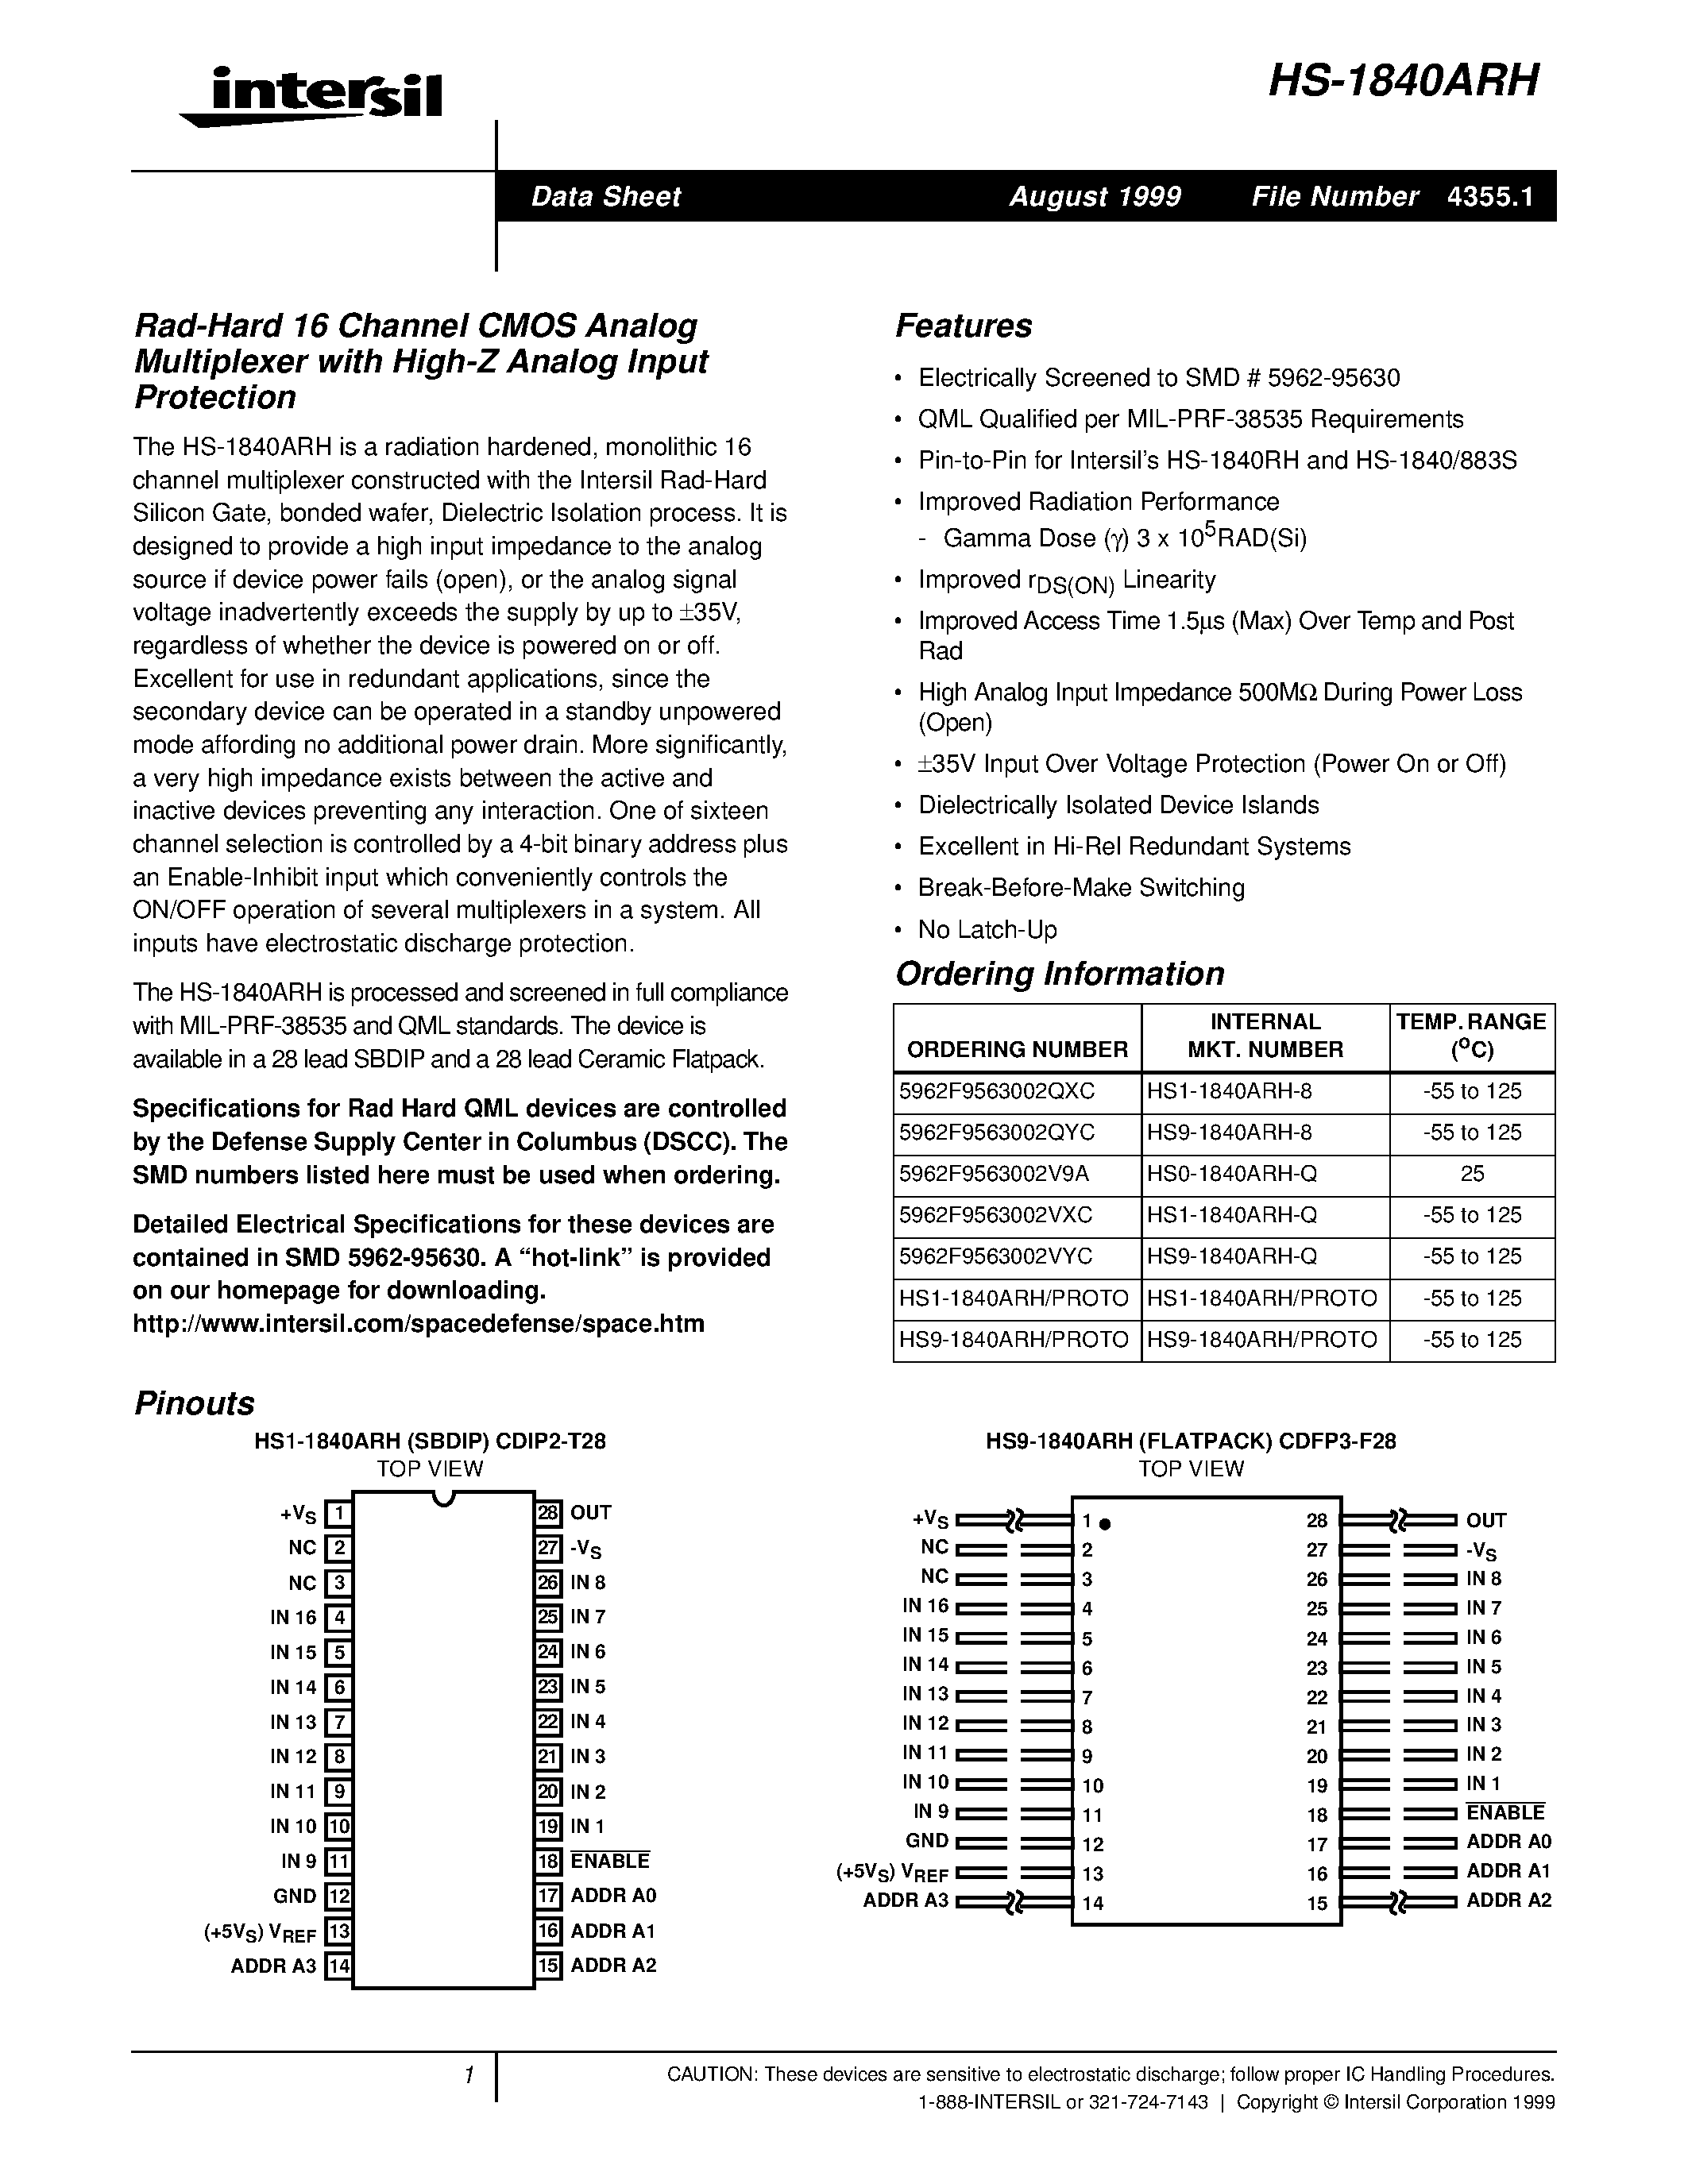 Даташит HS0-1840ARH-Q-Rad-Hard 16 Channel CMOS Analog Multiplexer with High-Z Analog Input Protection страница 1